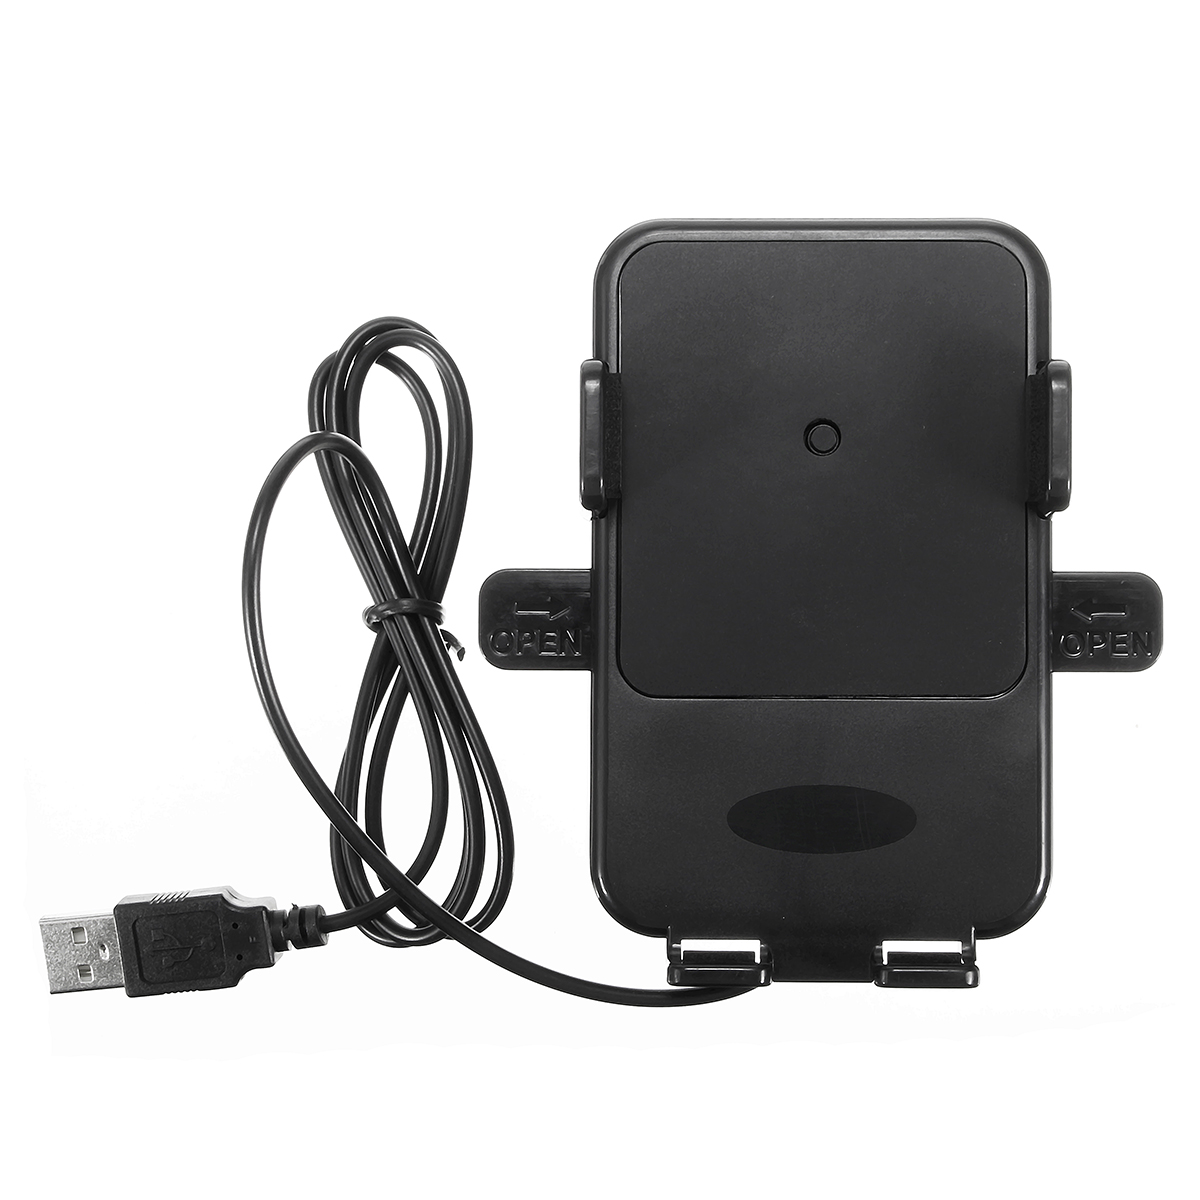 Qi Wireless Charger Dual USB Car Cig Arette Lighter Holder for I Phone Sam Sungder